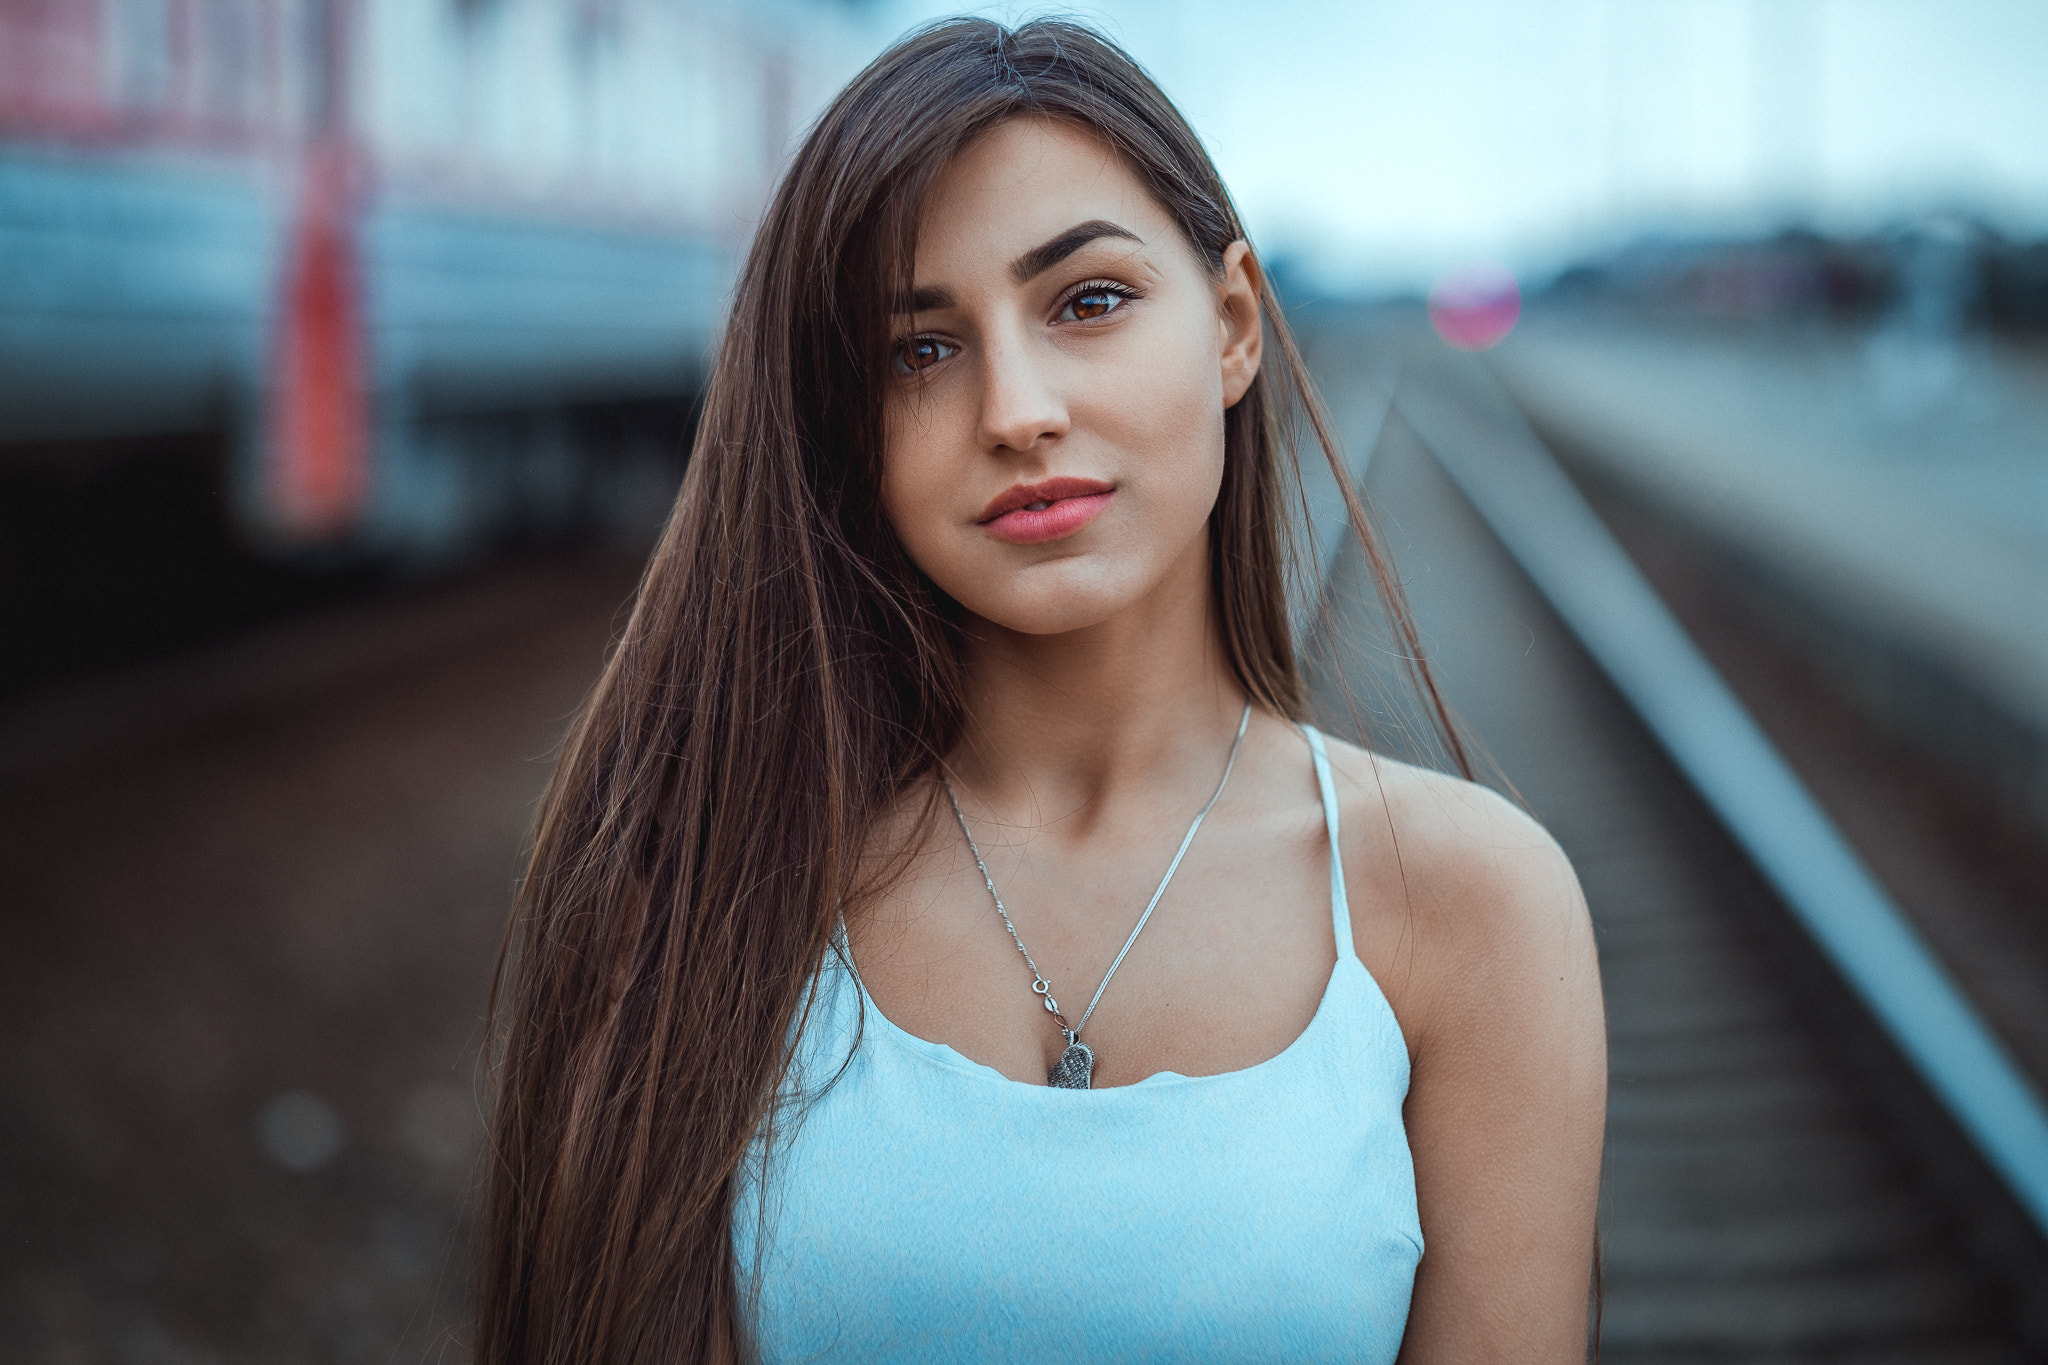 People 2048x1365 women face necklace long hair portrait women outdoors railway brunette tank top brown eyes silver necklace